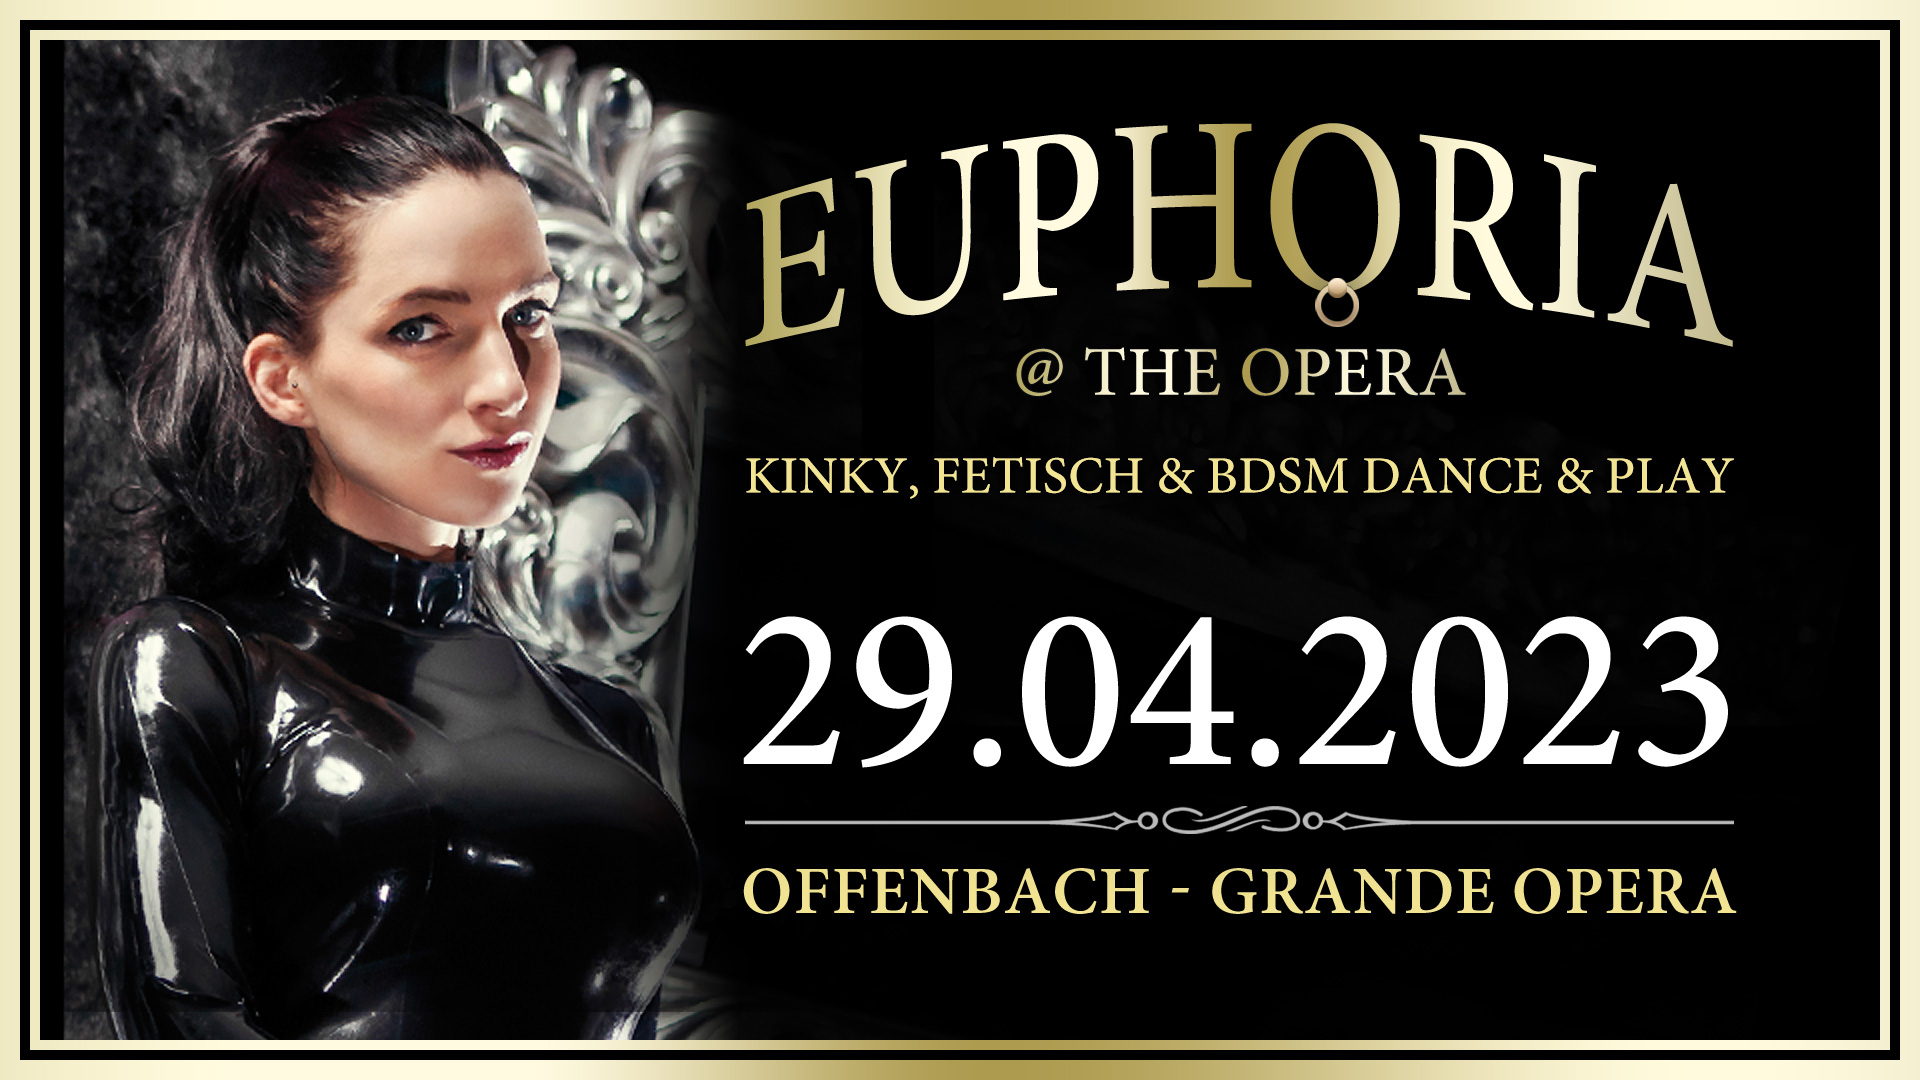 EUPHORIA @ the Opera » Kinky, Fetisch & BDSM Dance & Play Party mit DJ GILLIAN in der Grande Opera Offenbach.